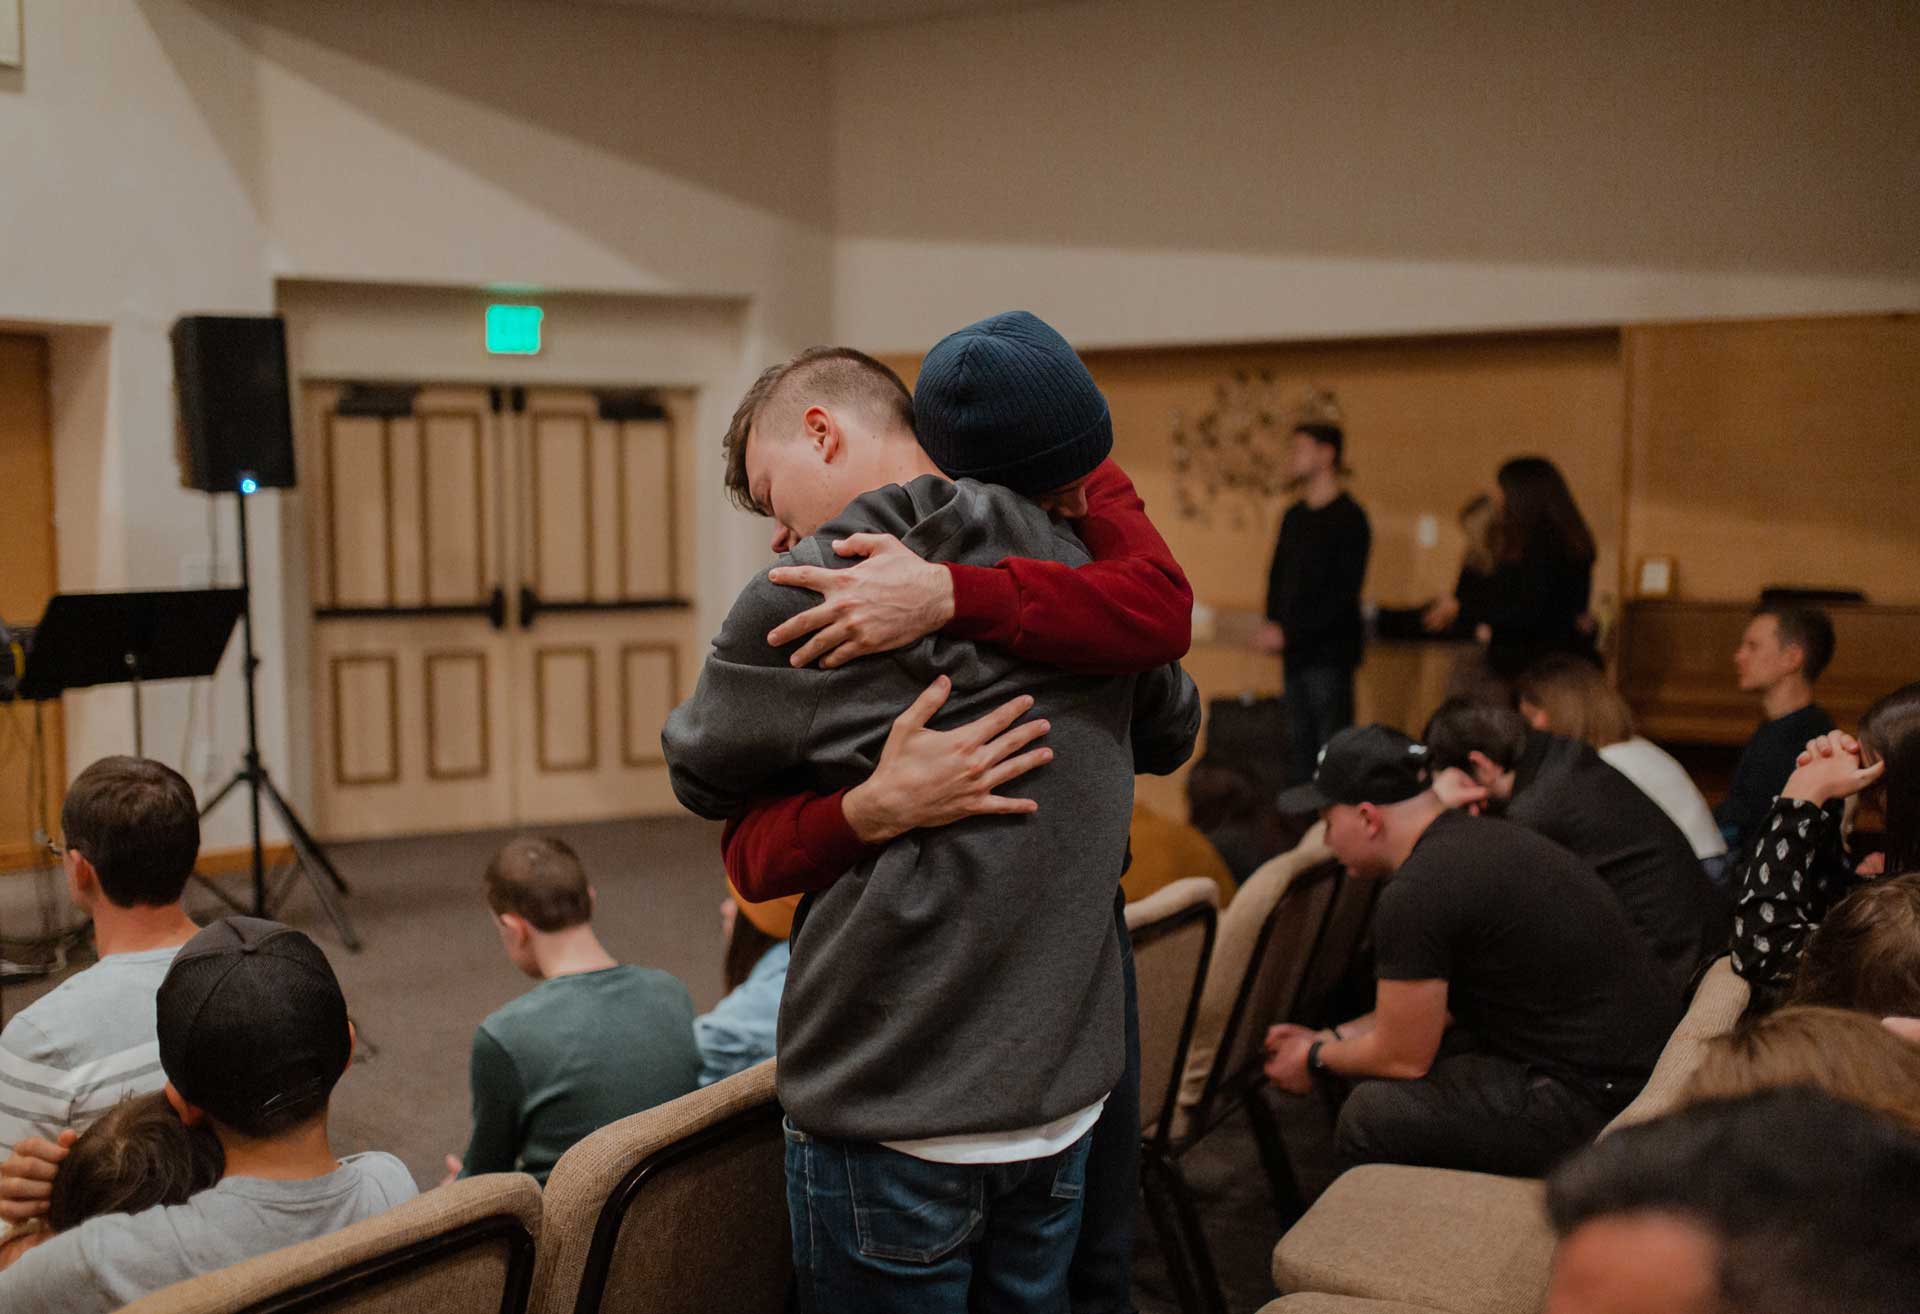 CHRISTIAN MEN IN CHURCH HUGGING WEARING BEANIE